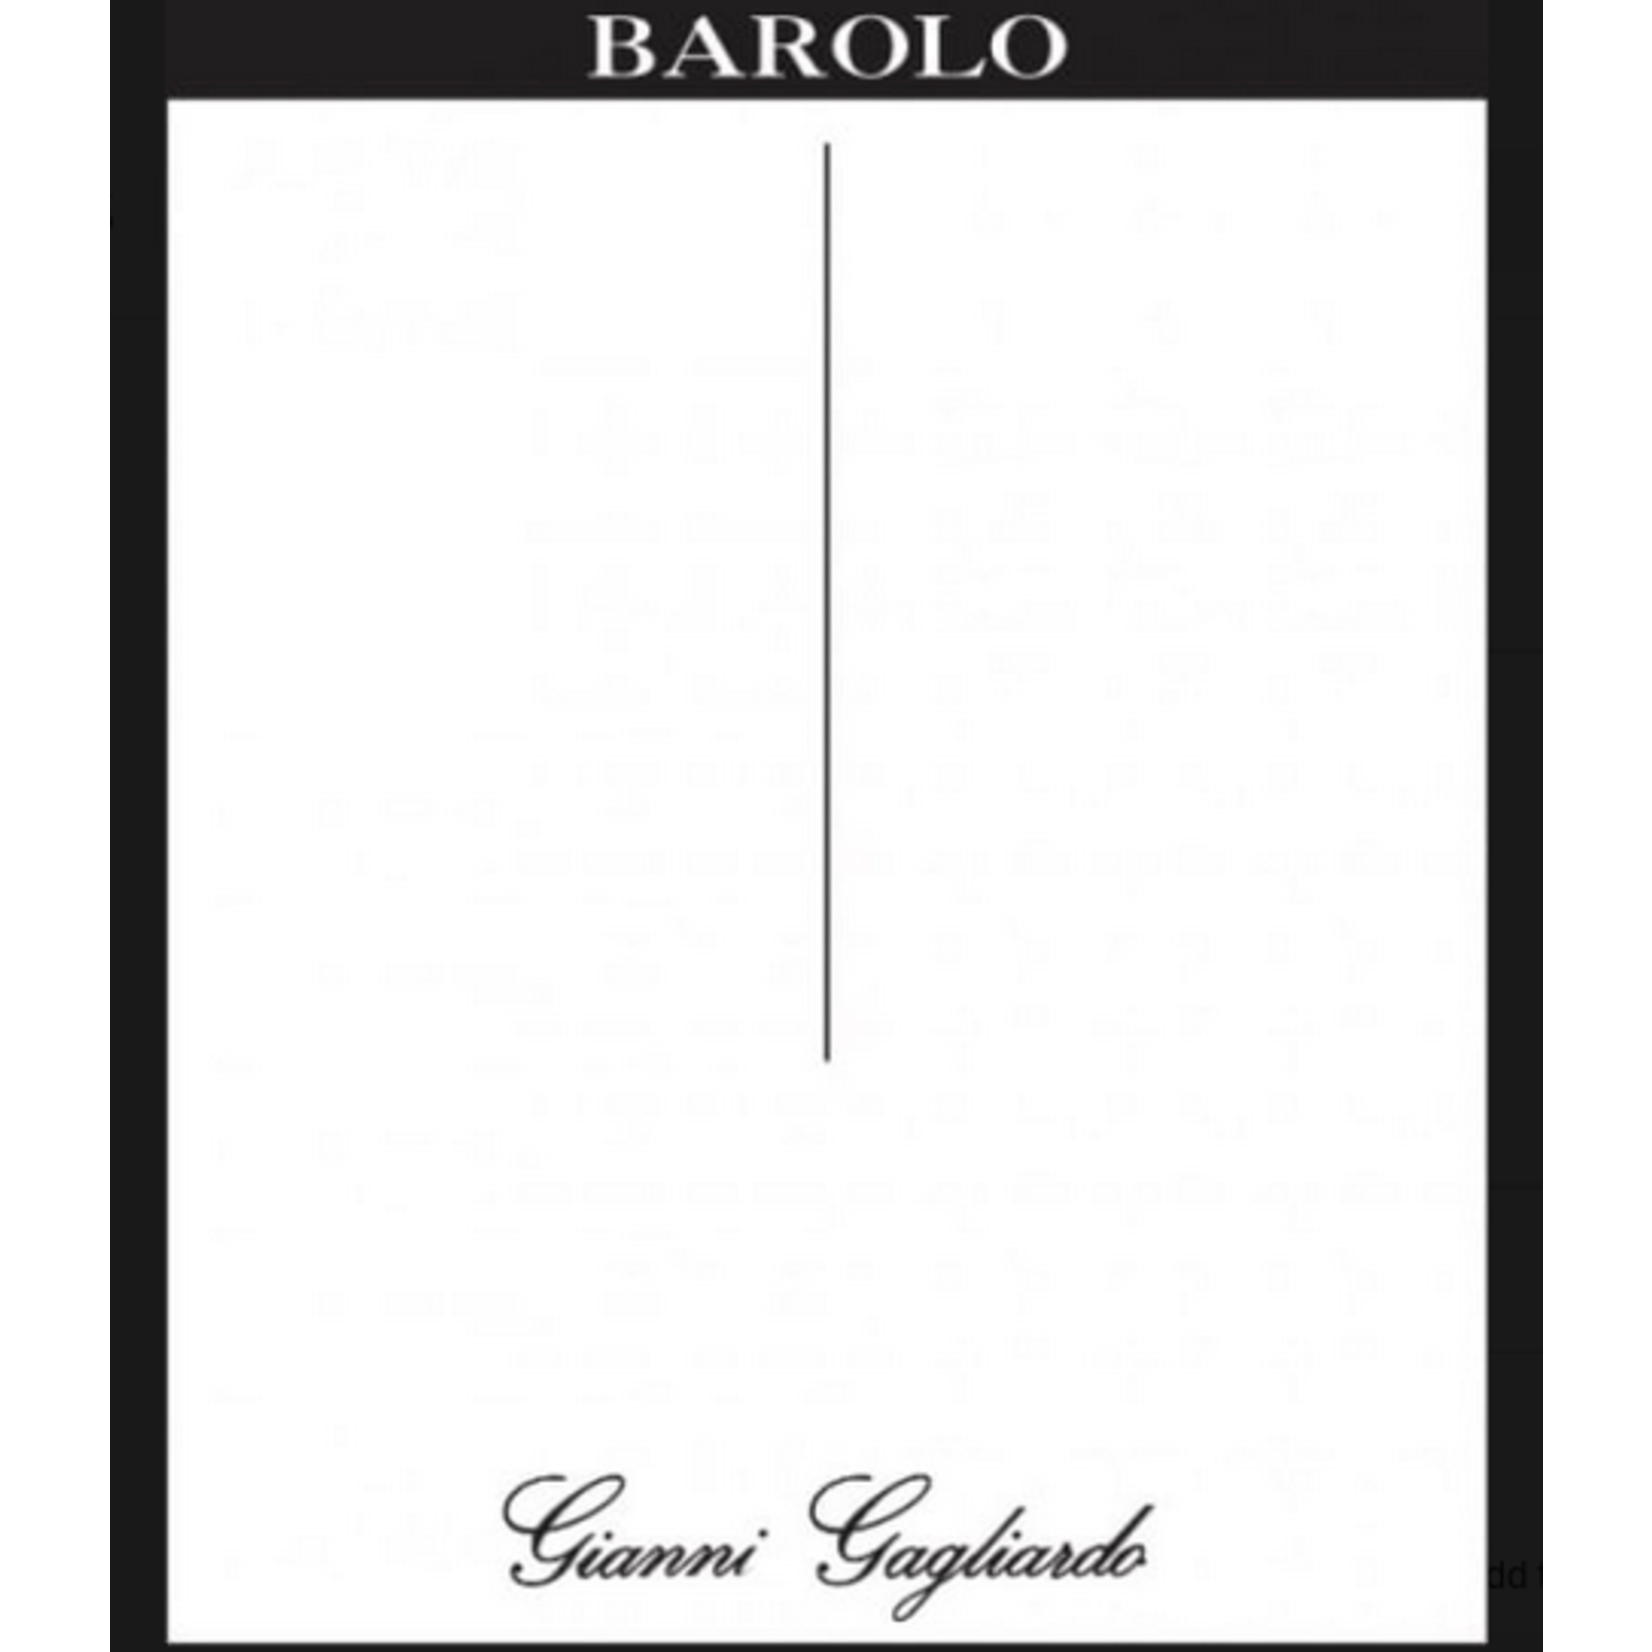 Gianni Gagliardo Barolo 2016  Piedmont, Italy  94pts-JS